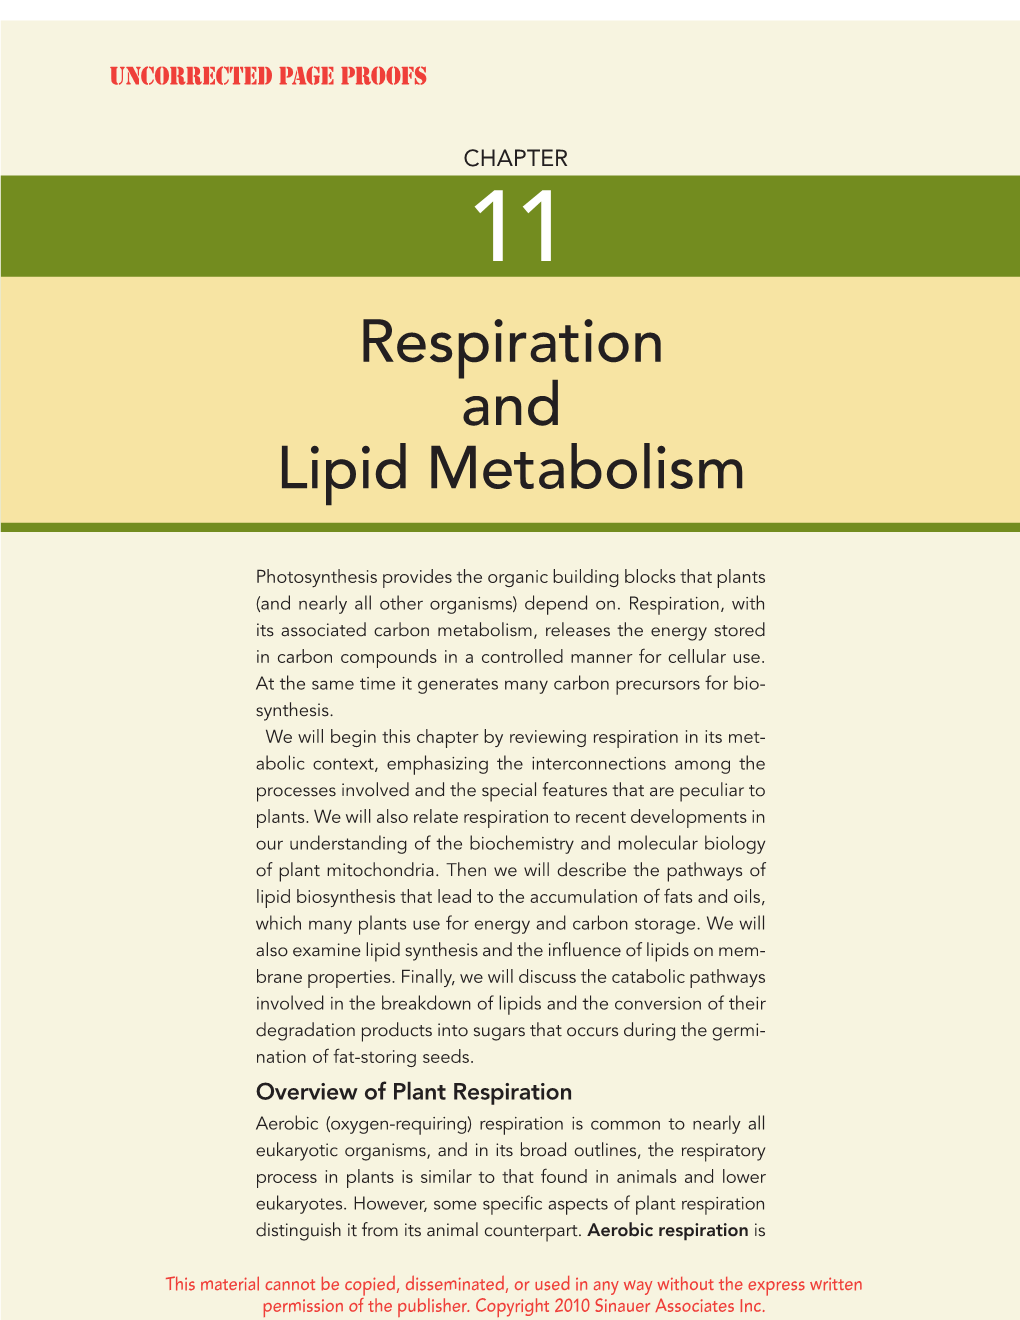 Respiration and Lipid Metabolism